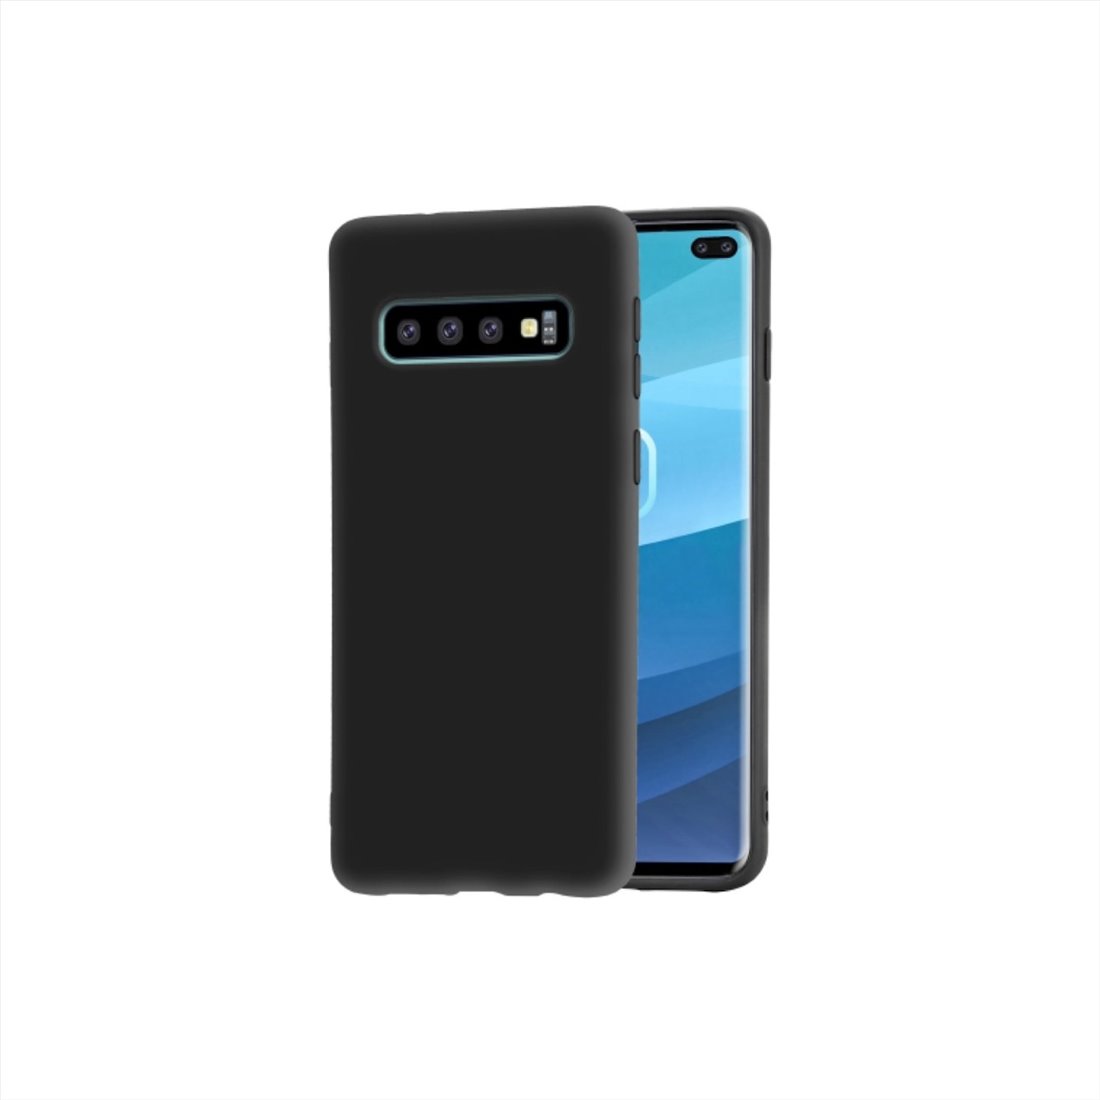 Samsung Galaxy S10 silicone Black Back Cover Smartphone Case